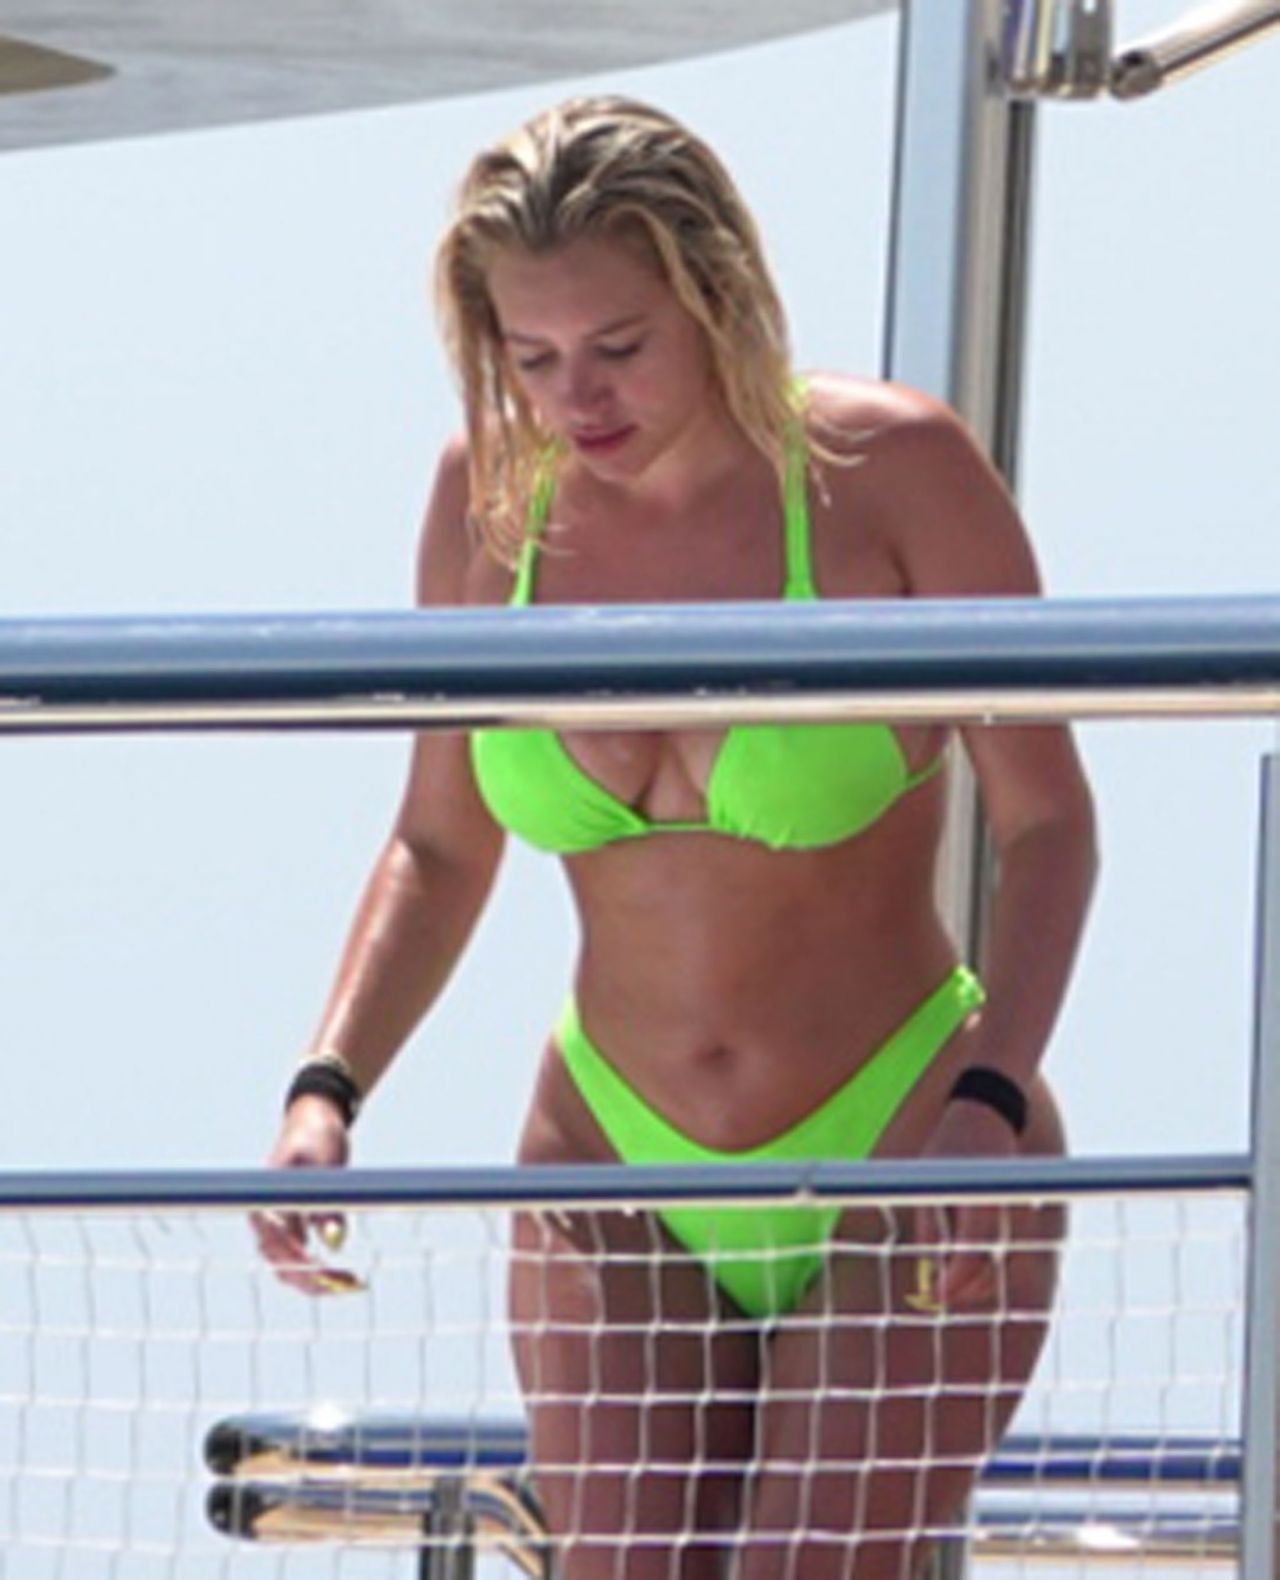 Stassie Karanikolaou in a Lime Green Bikini 08/08/20191280 x 1580